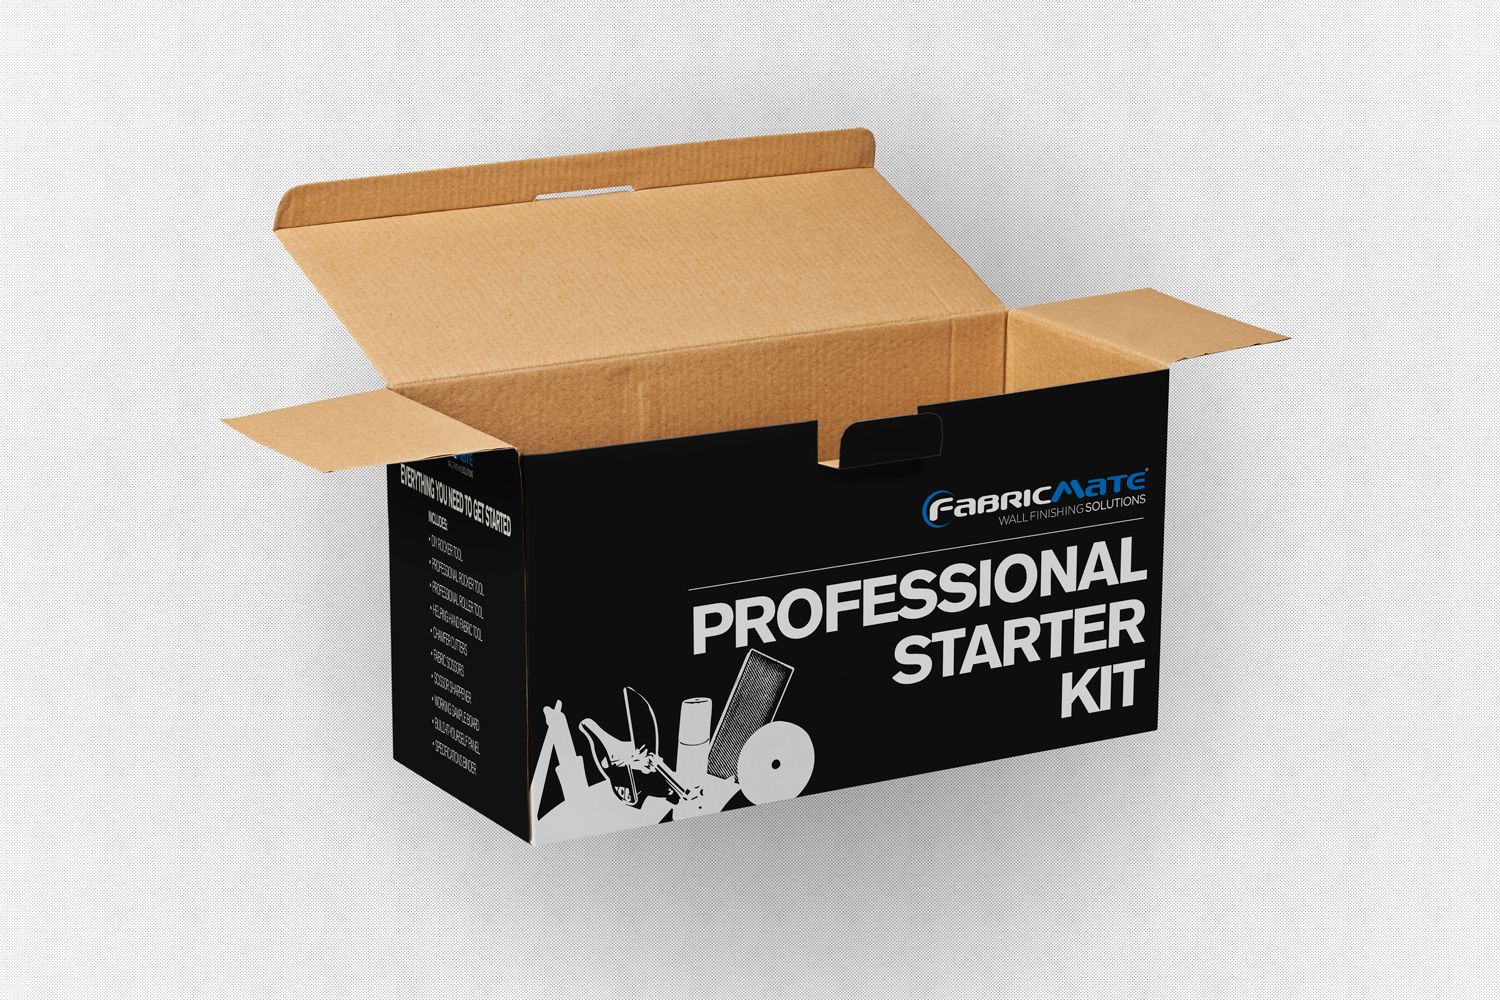 Fabricmate - Professional Starter Kit